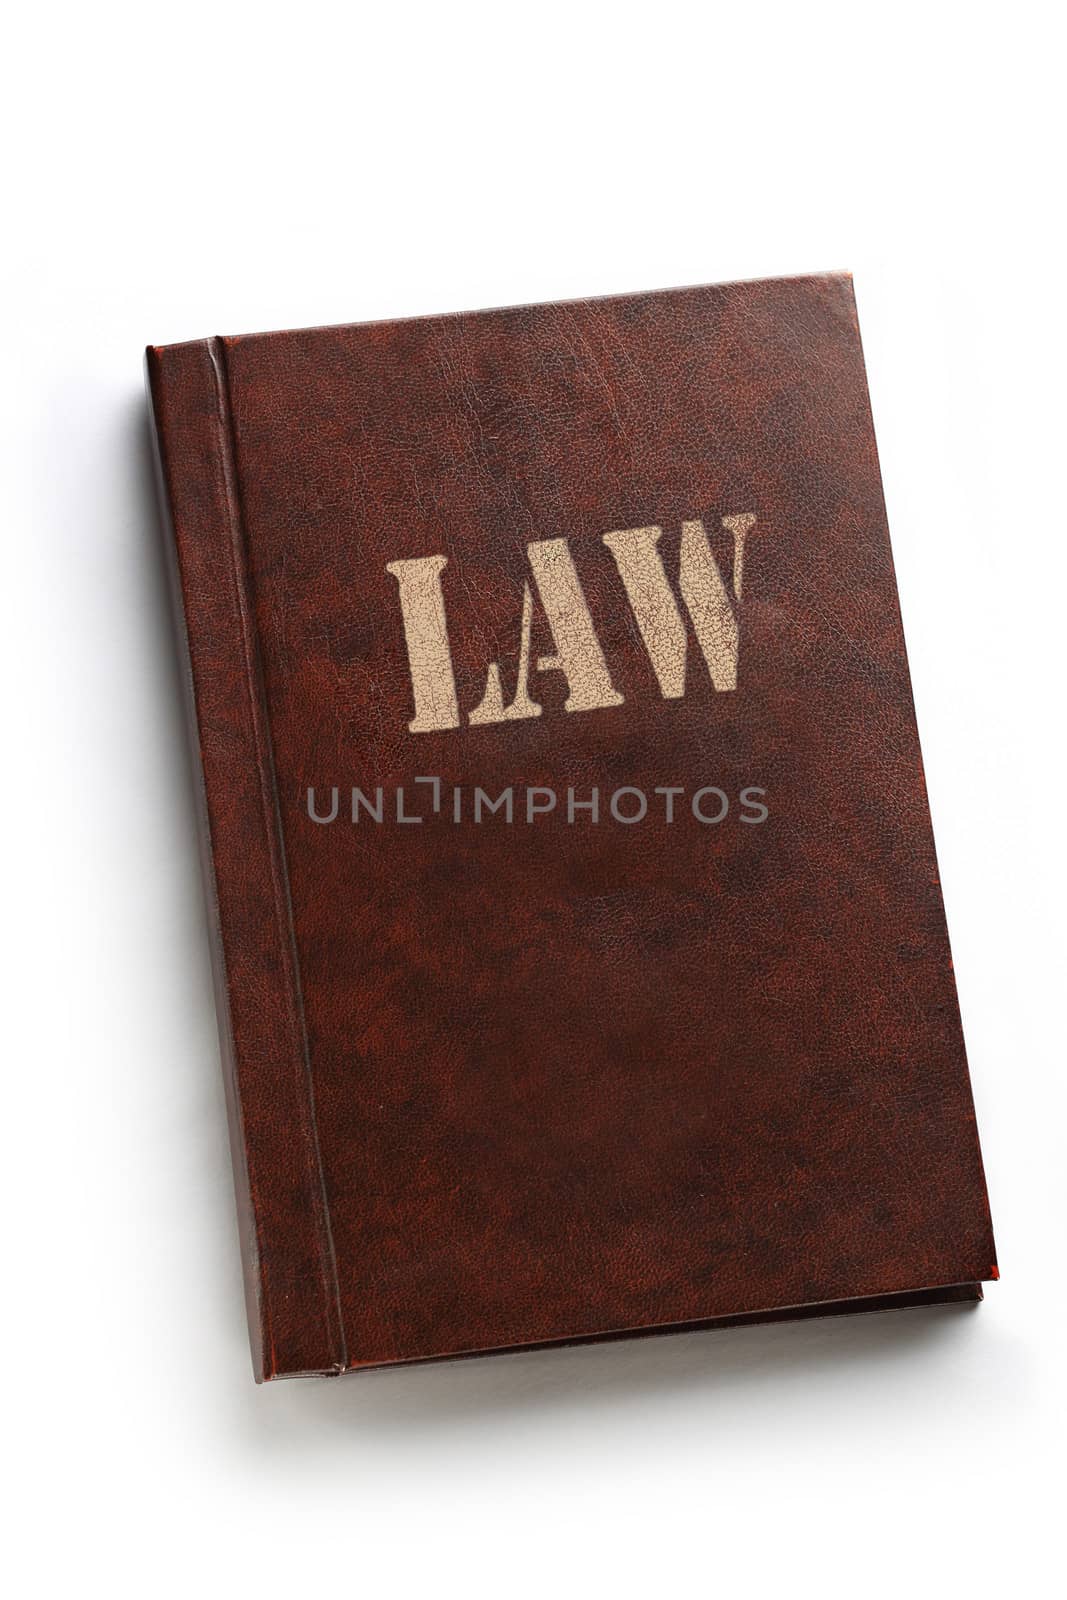 Law book on white background by Garsya